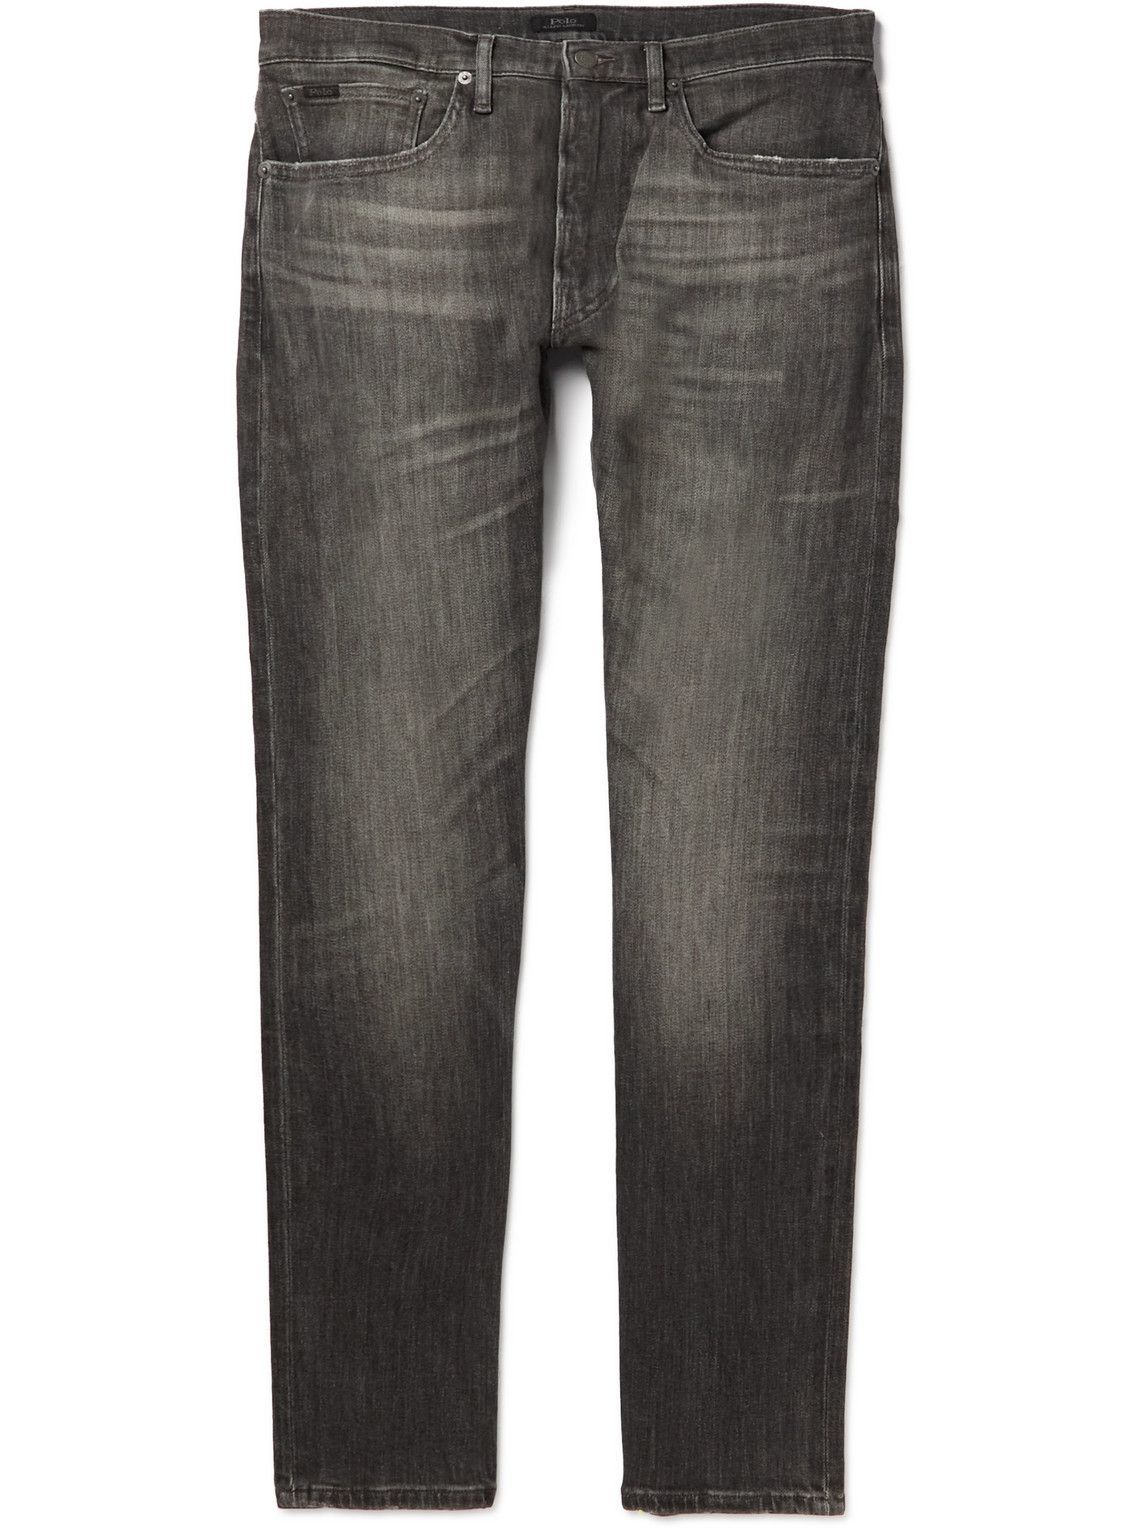 Polo Ralph Lauren - Slim-Fit Jeans - Gray